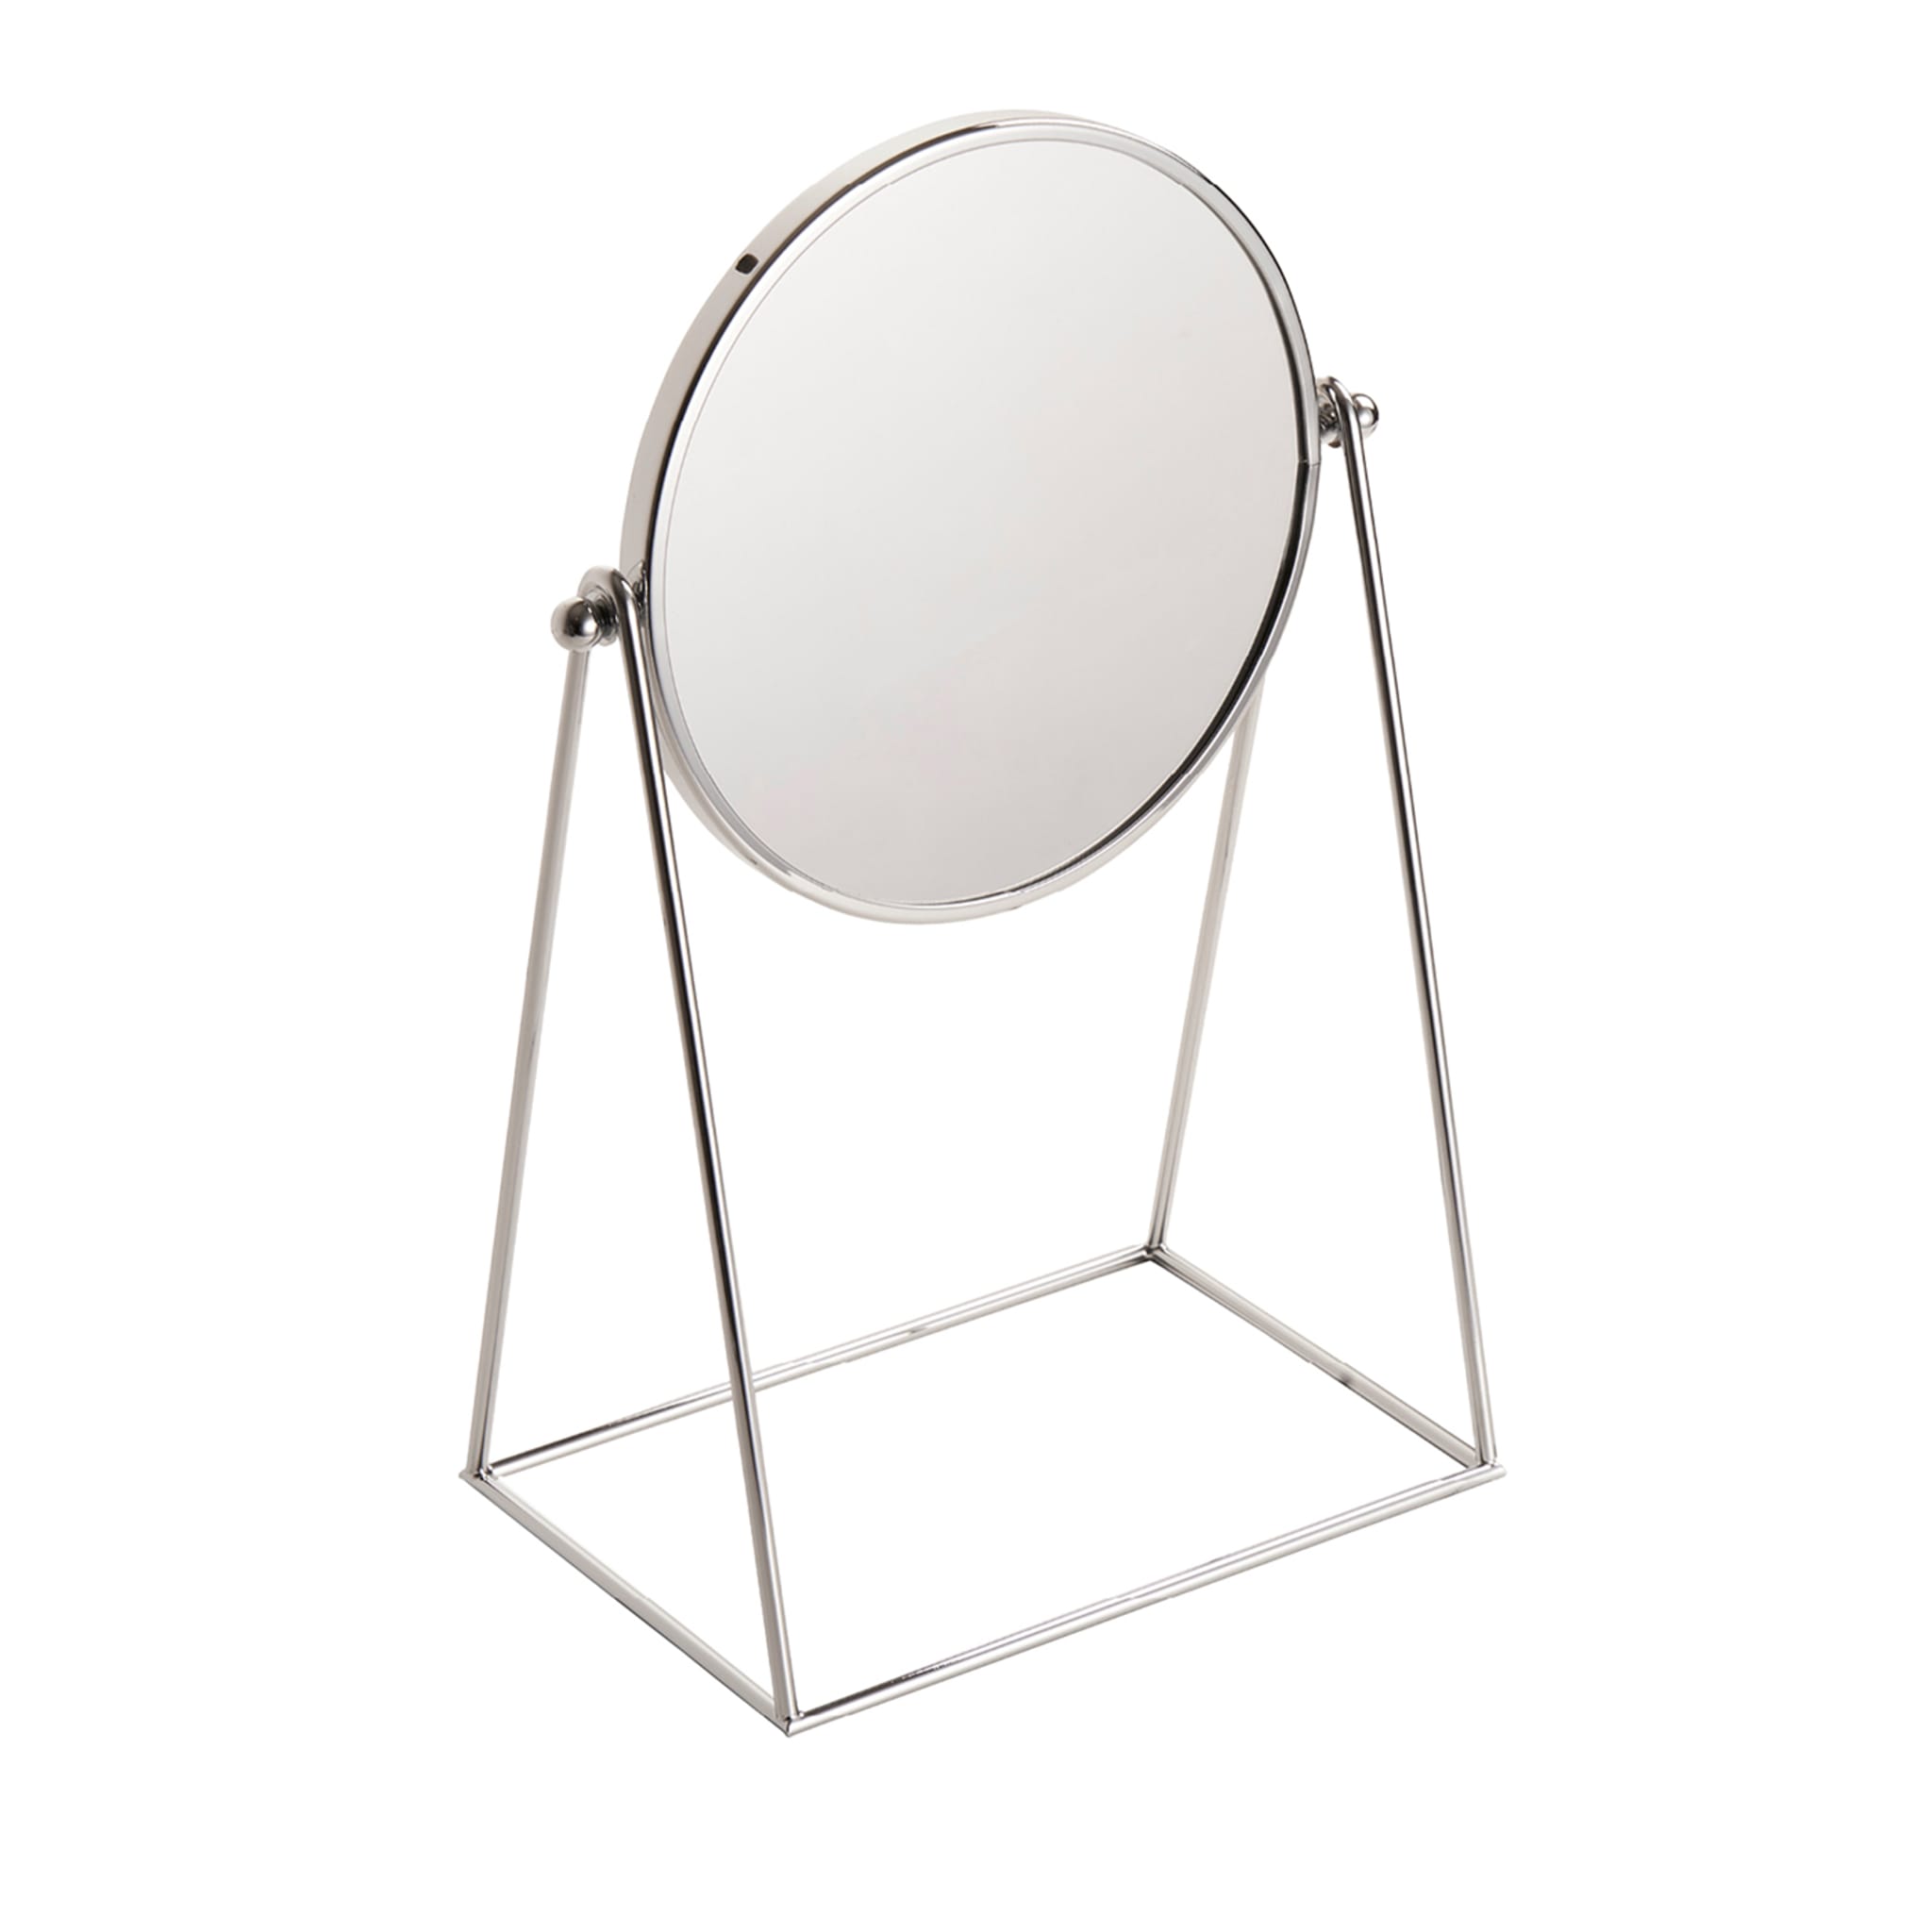  Waltz Tilting Freestanding Mirror  - Main view